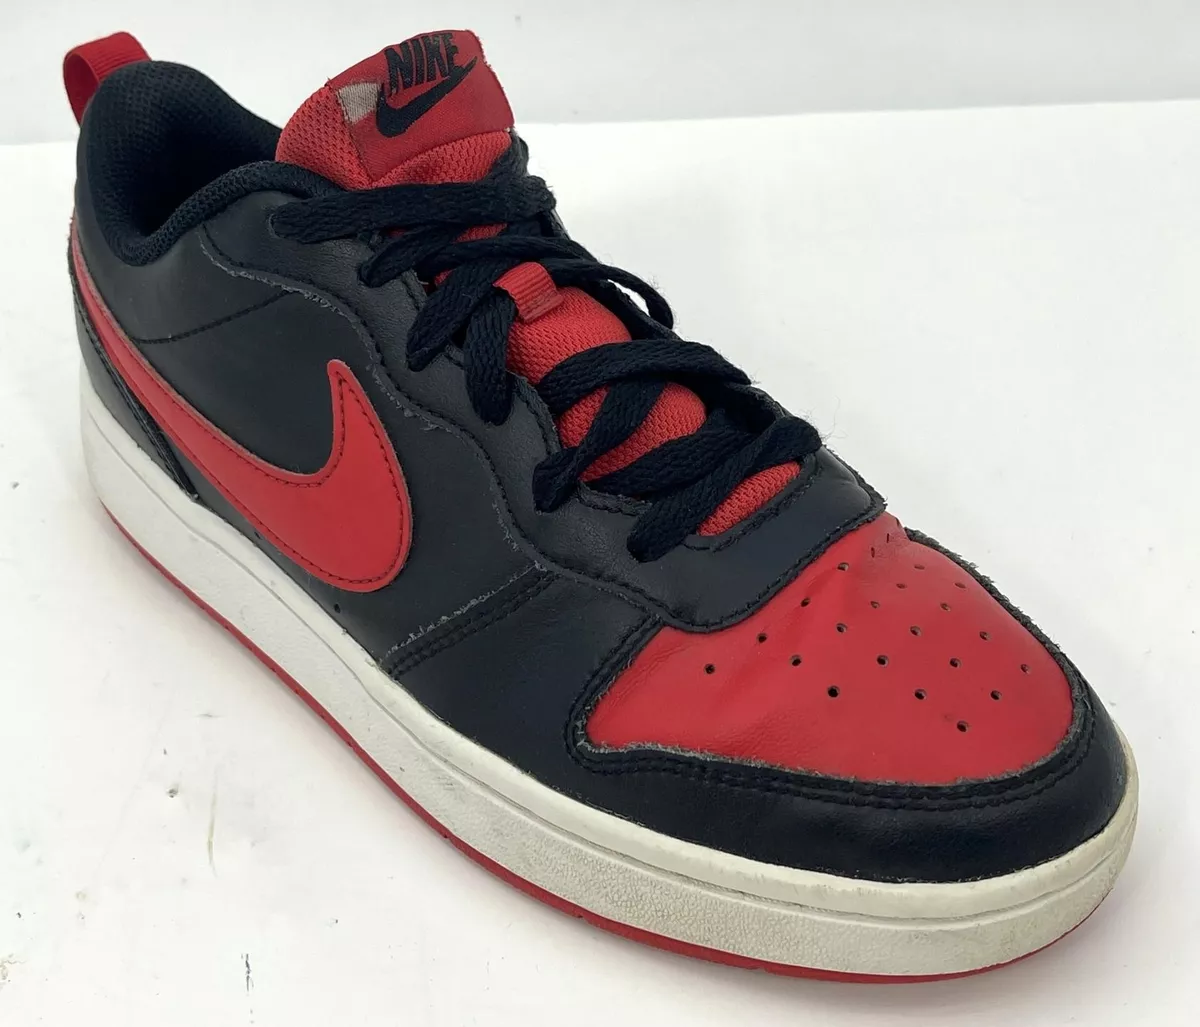 Nike Kids' Court Borough Low 2 Black & Red Shoes